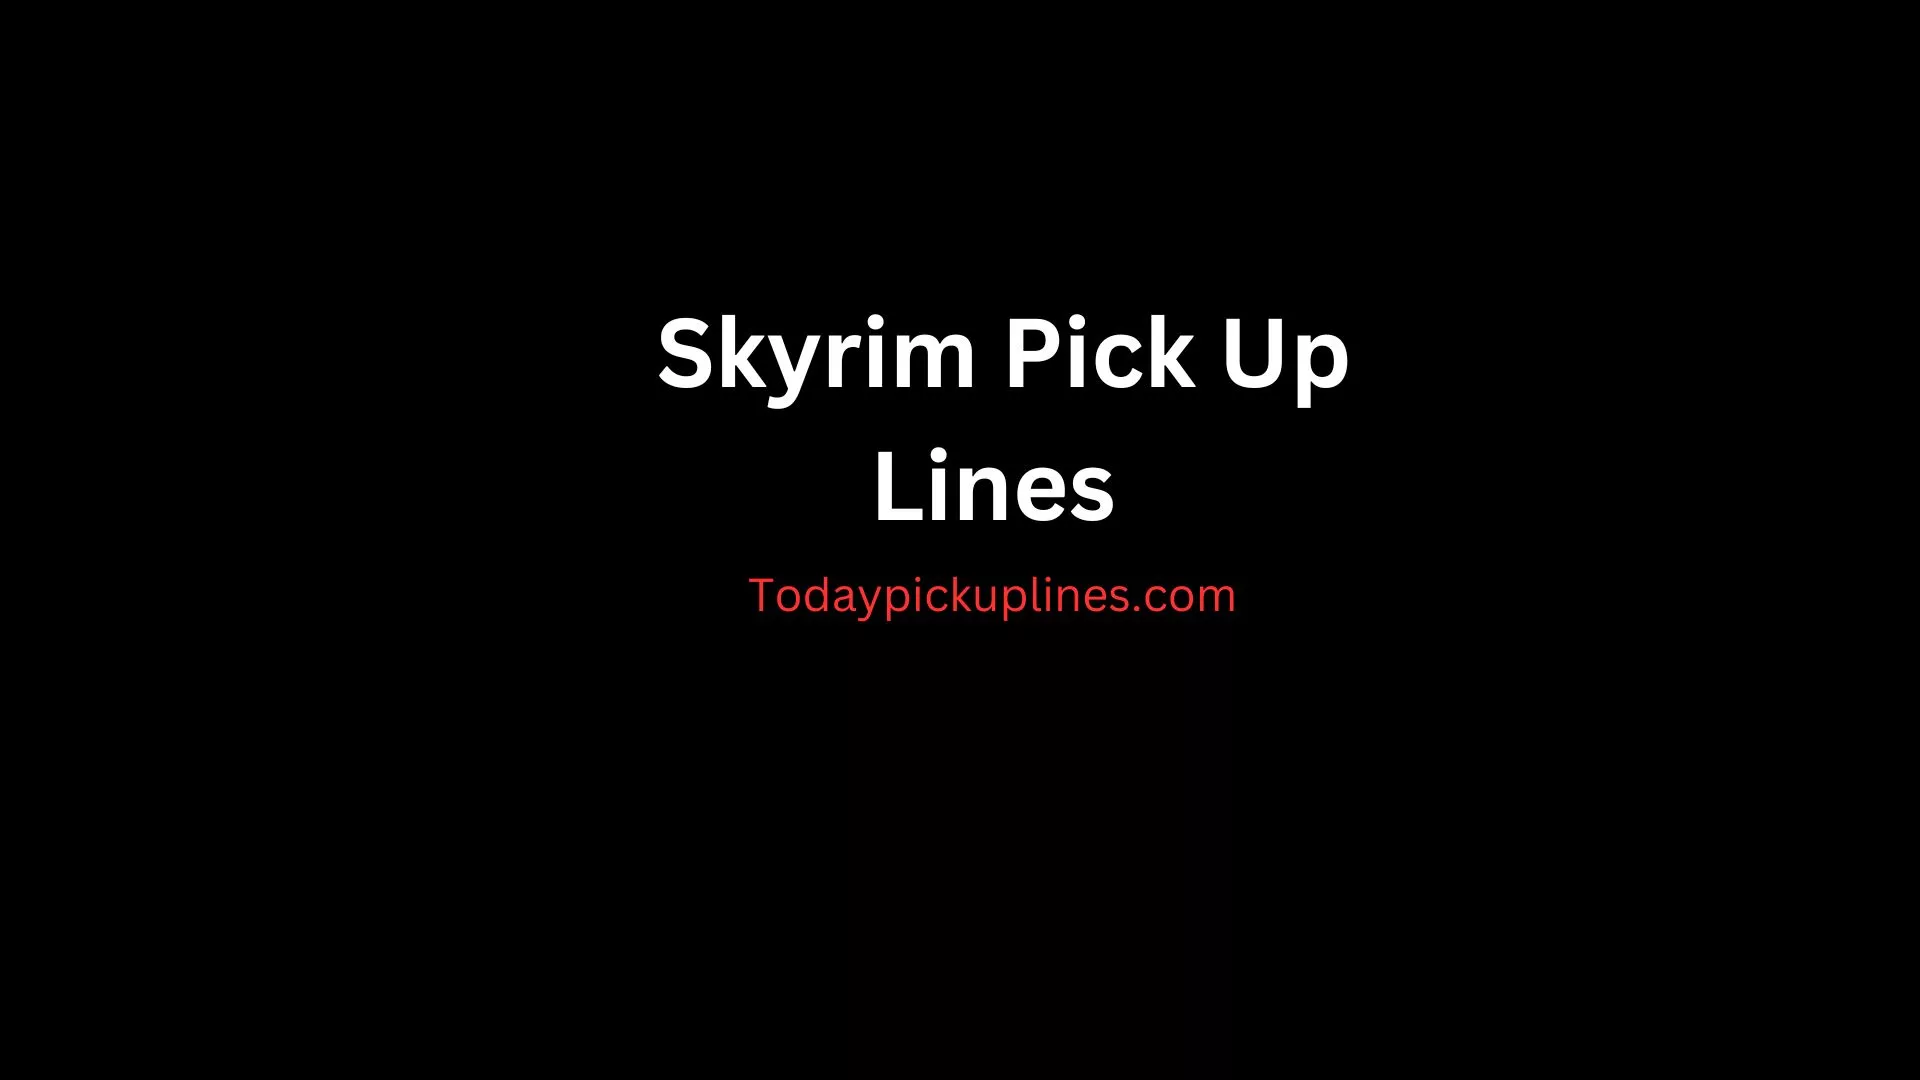 Skyrim Pick Up Lines